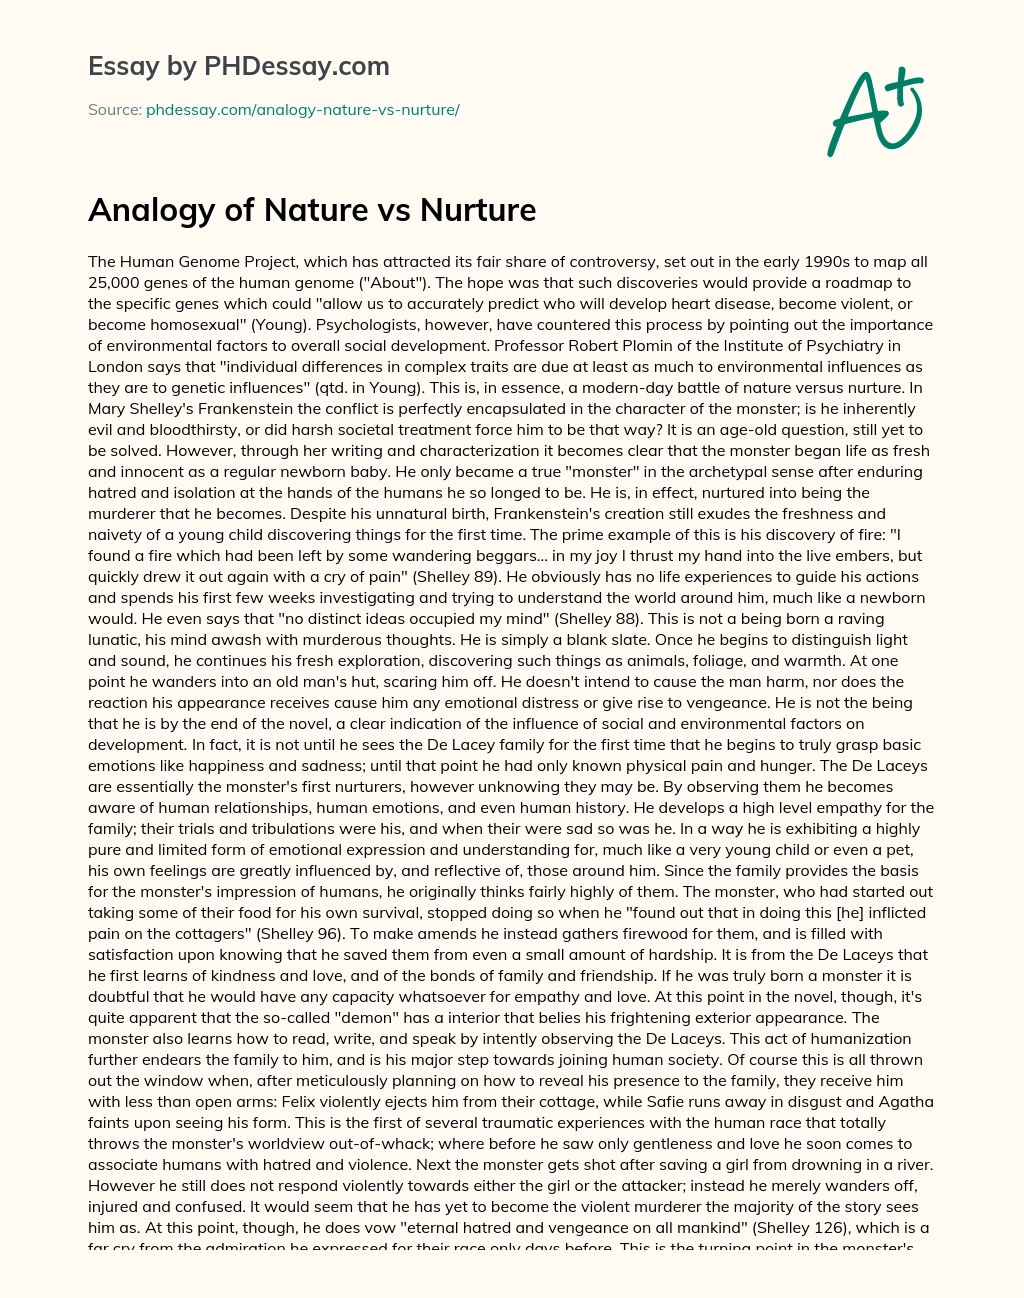 Analogy of Nature vs Nurture essay